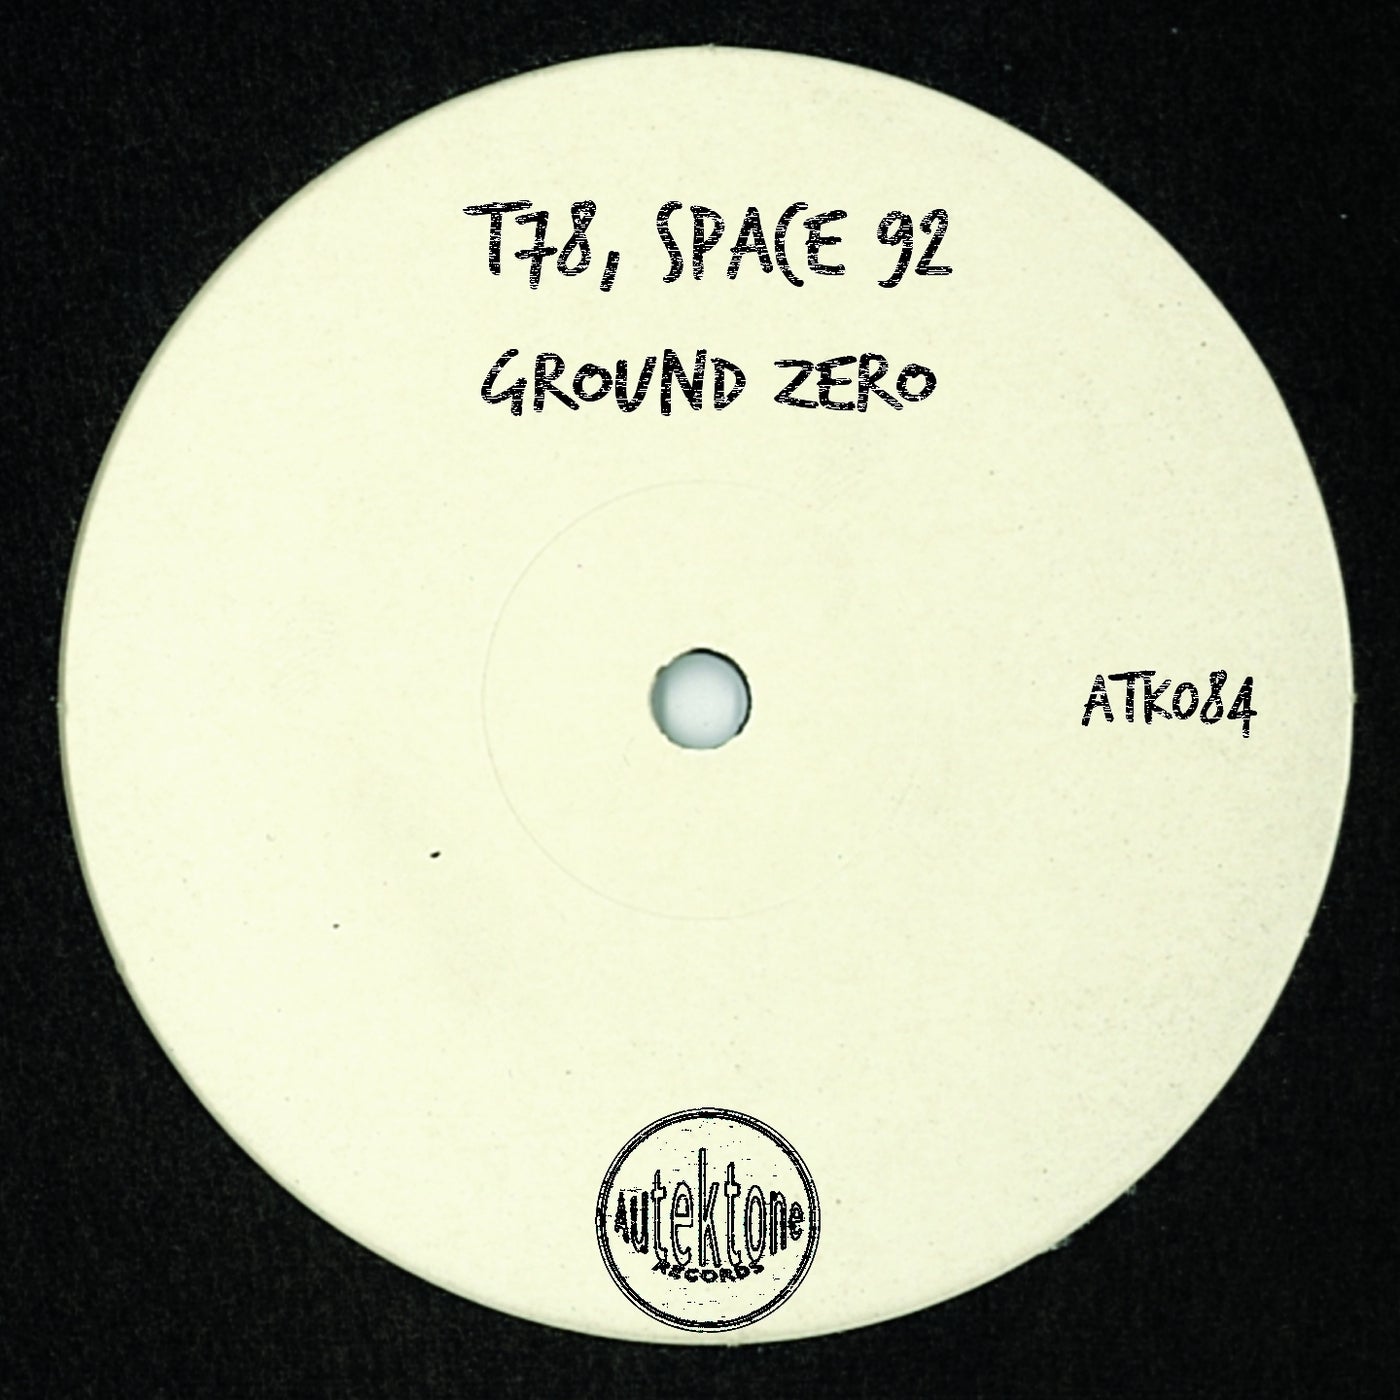 T78, Space 92 - Ground Zero [ATK084]